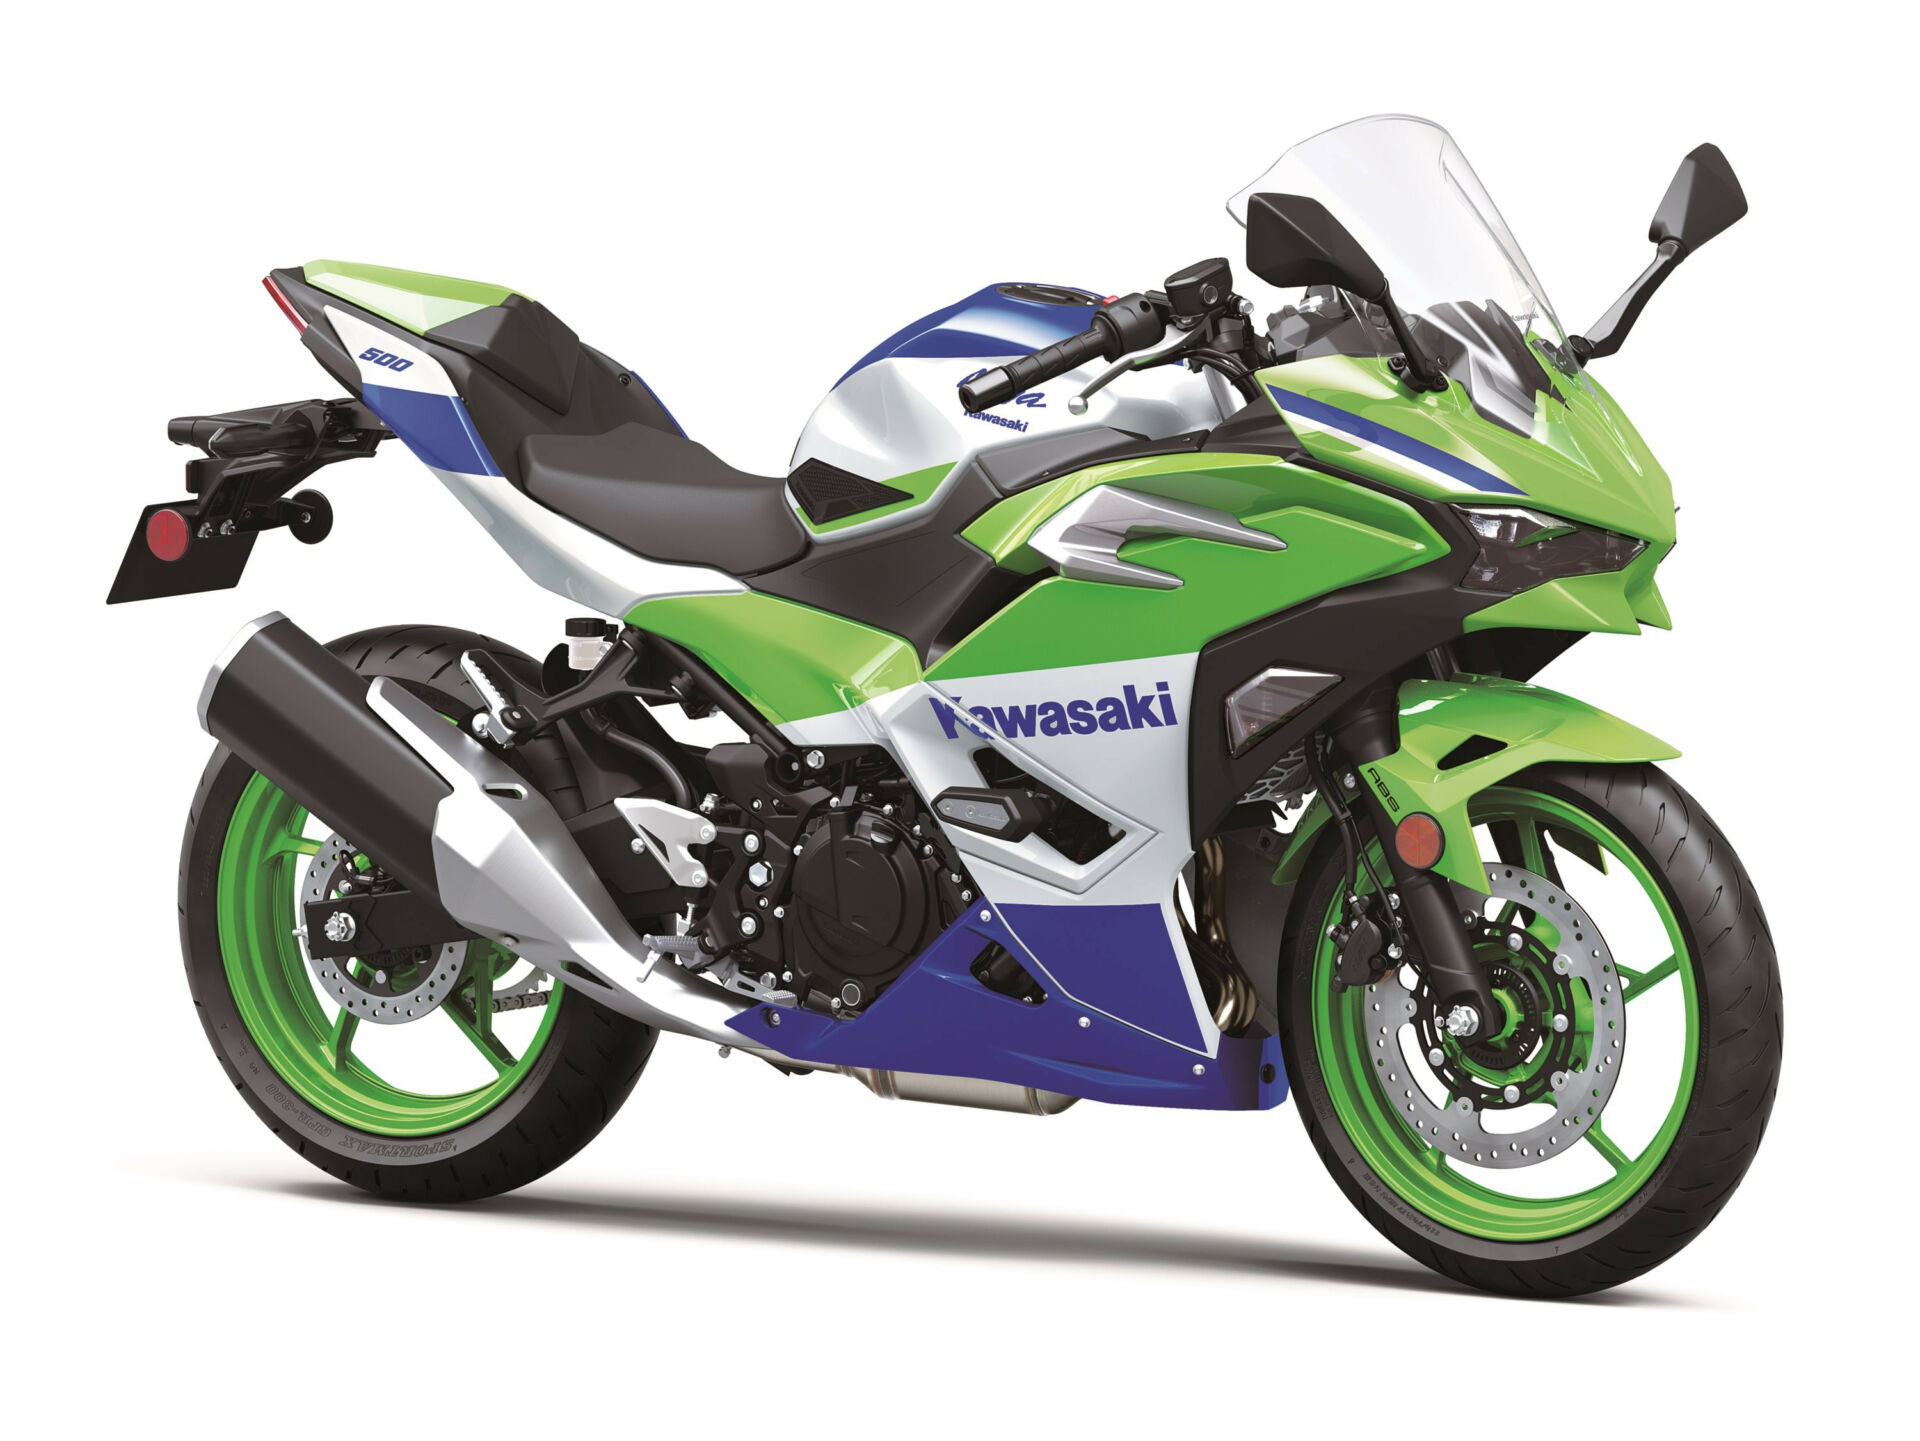 Kawasaki Launches All-New Ninja 500 (Updated) - Roadracing World Magazine